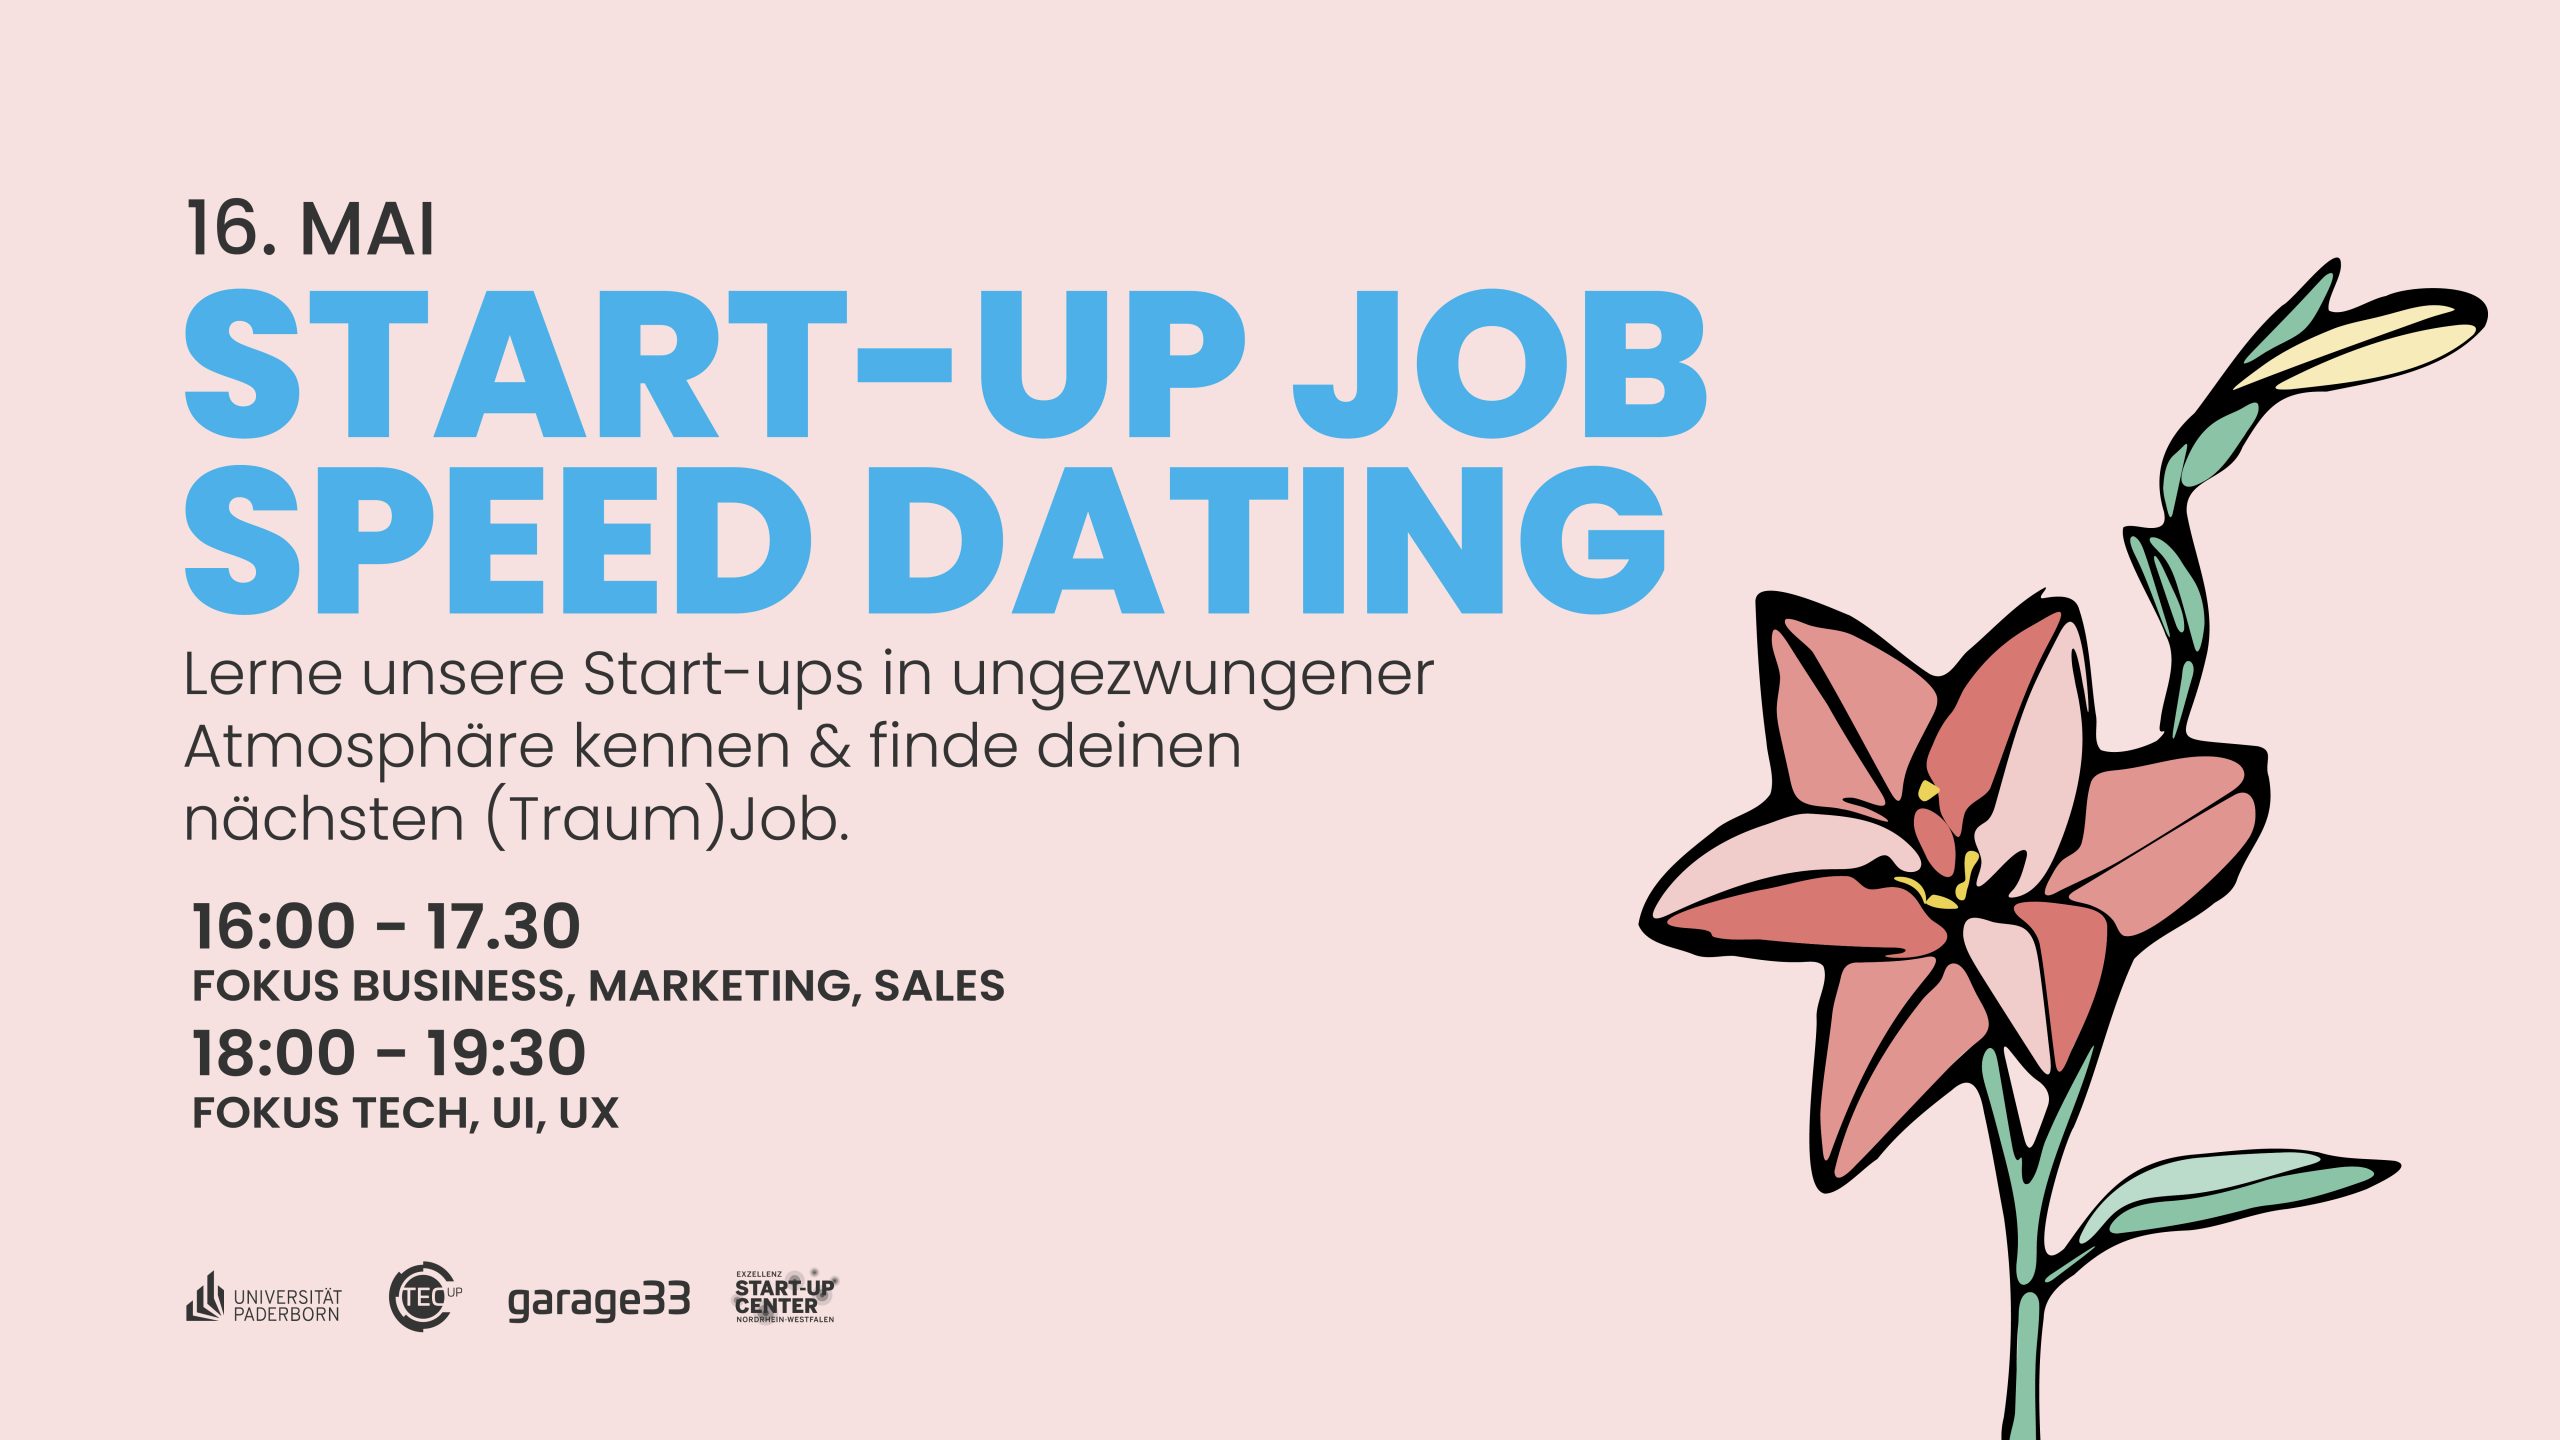 Start-up Job Speed Dating